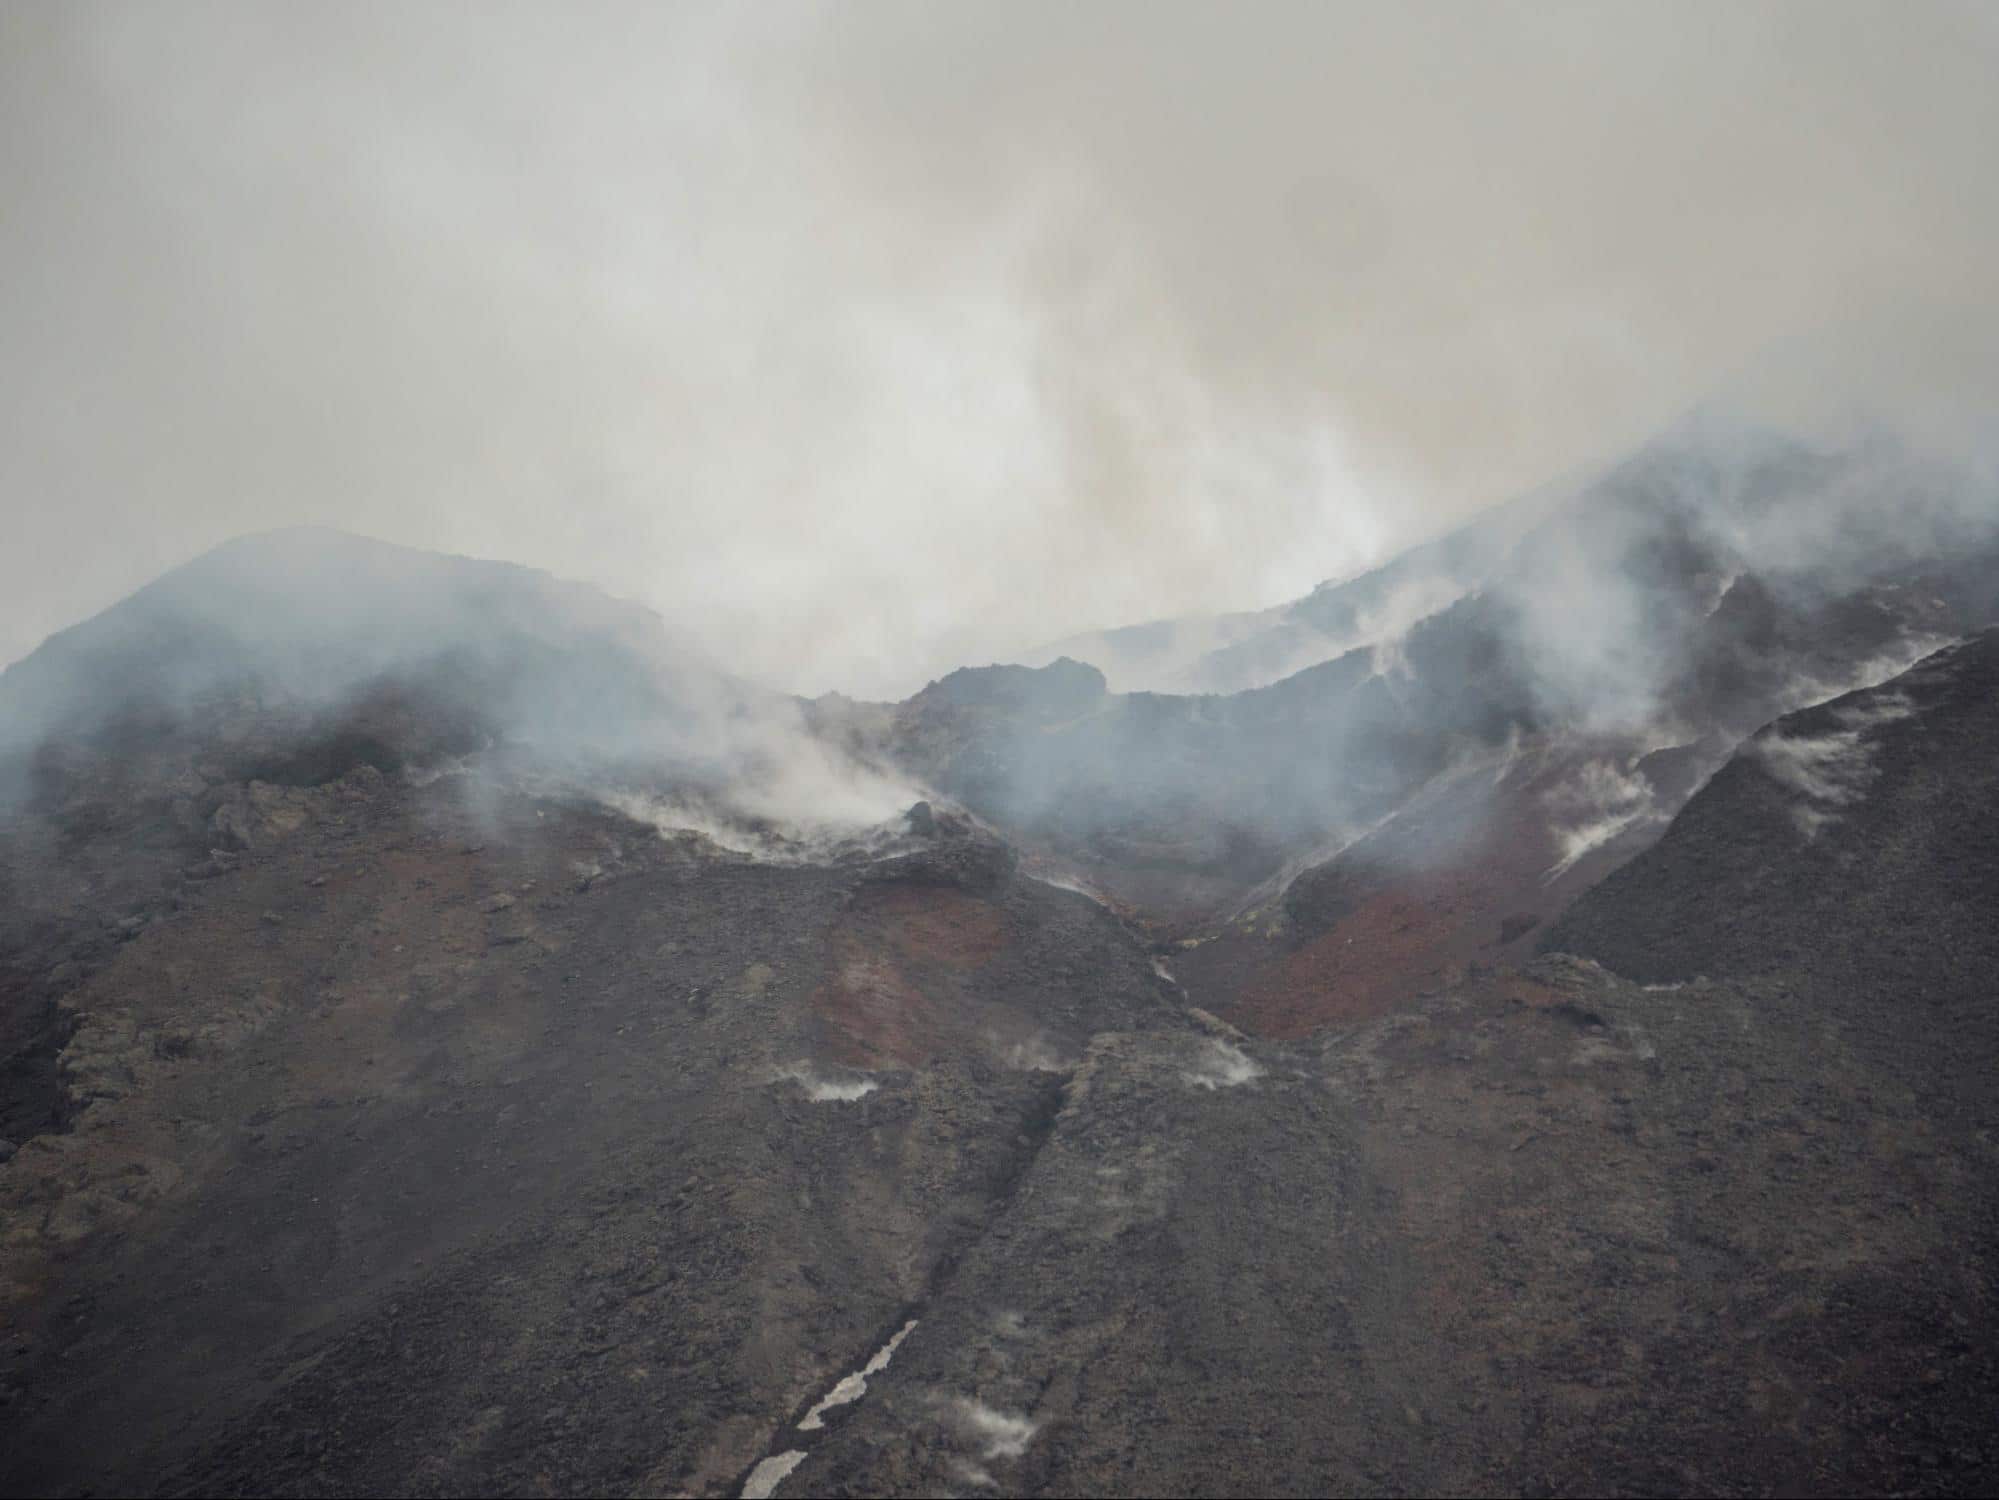 Mount Etna a week after the June 2019 explosion